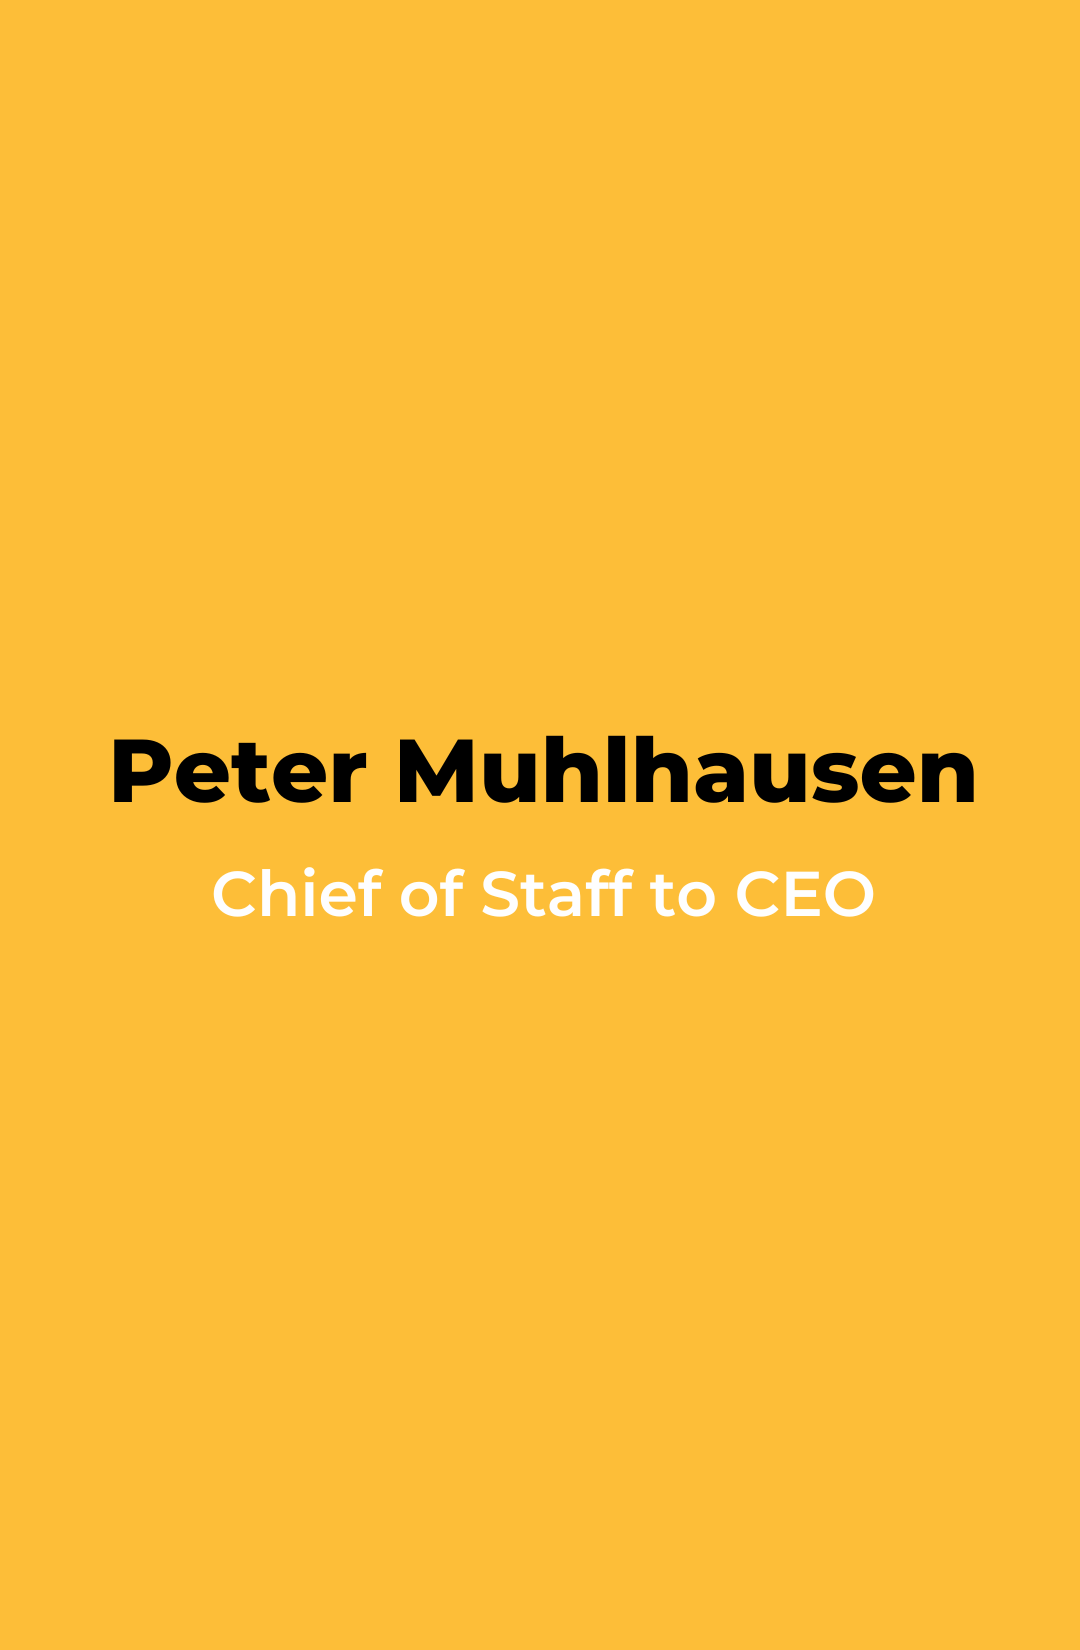 Peter Muhlhausen3